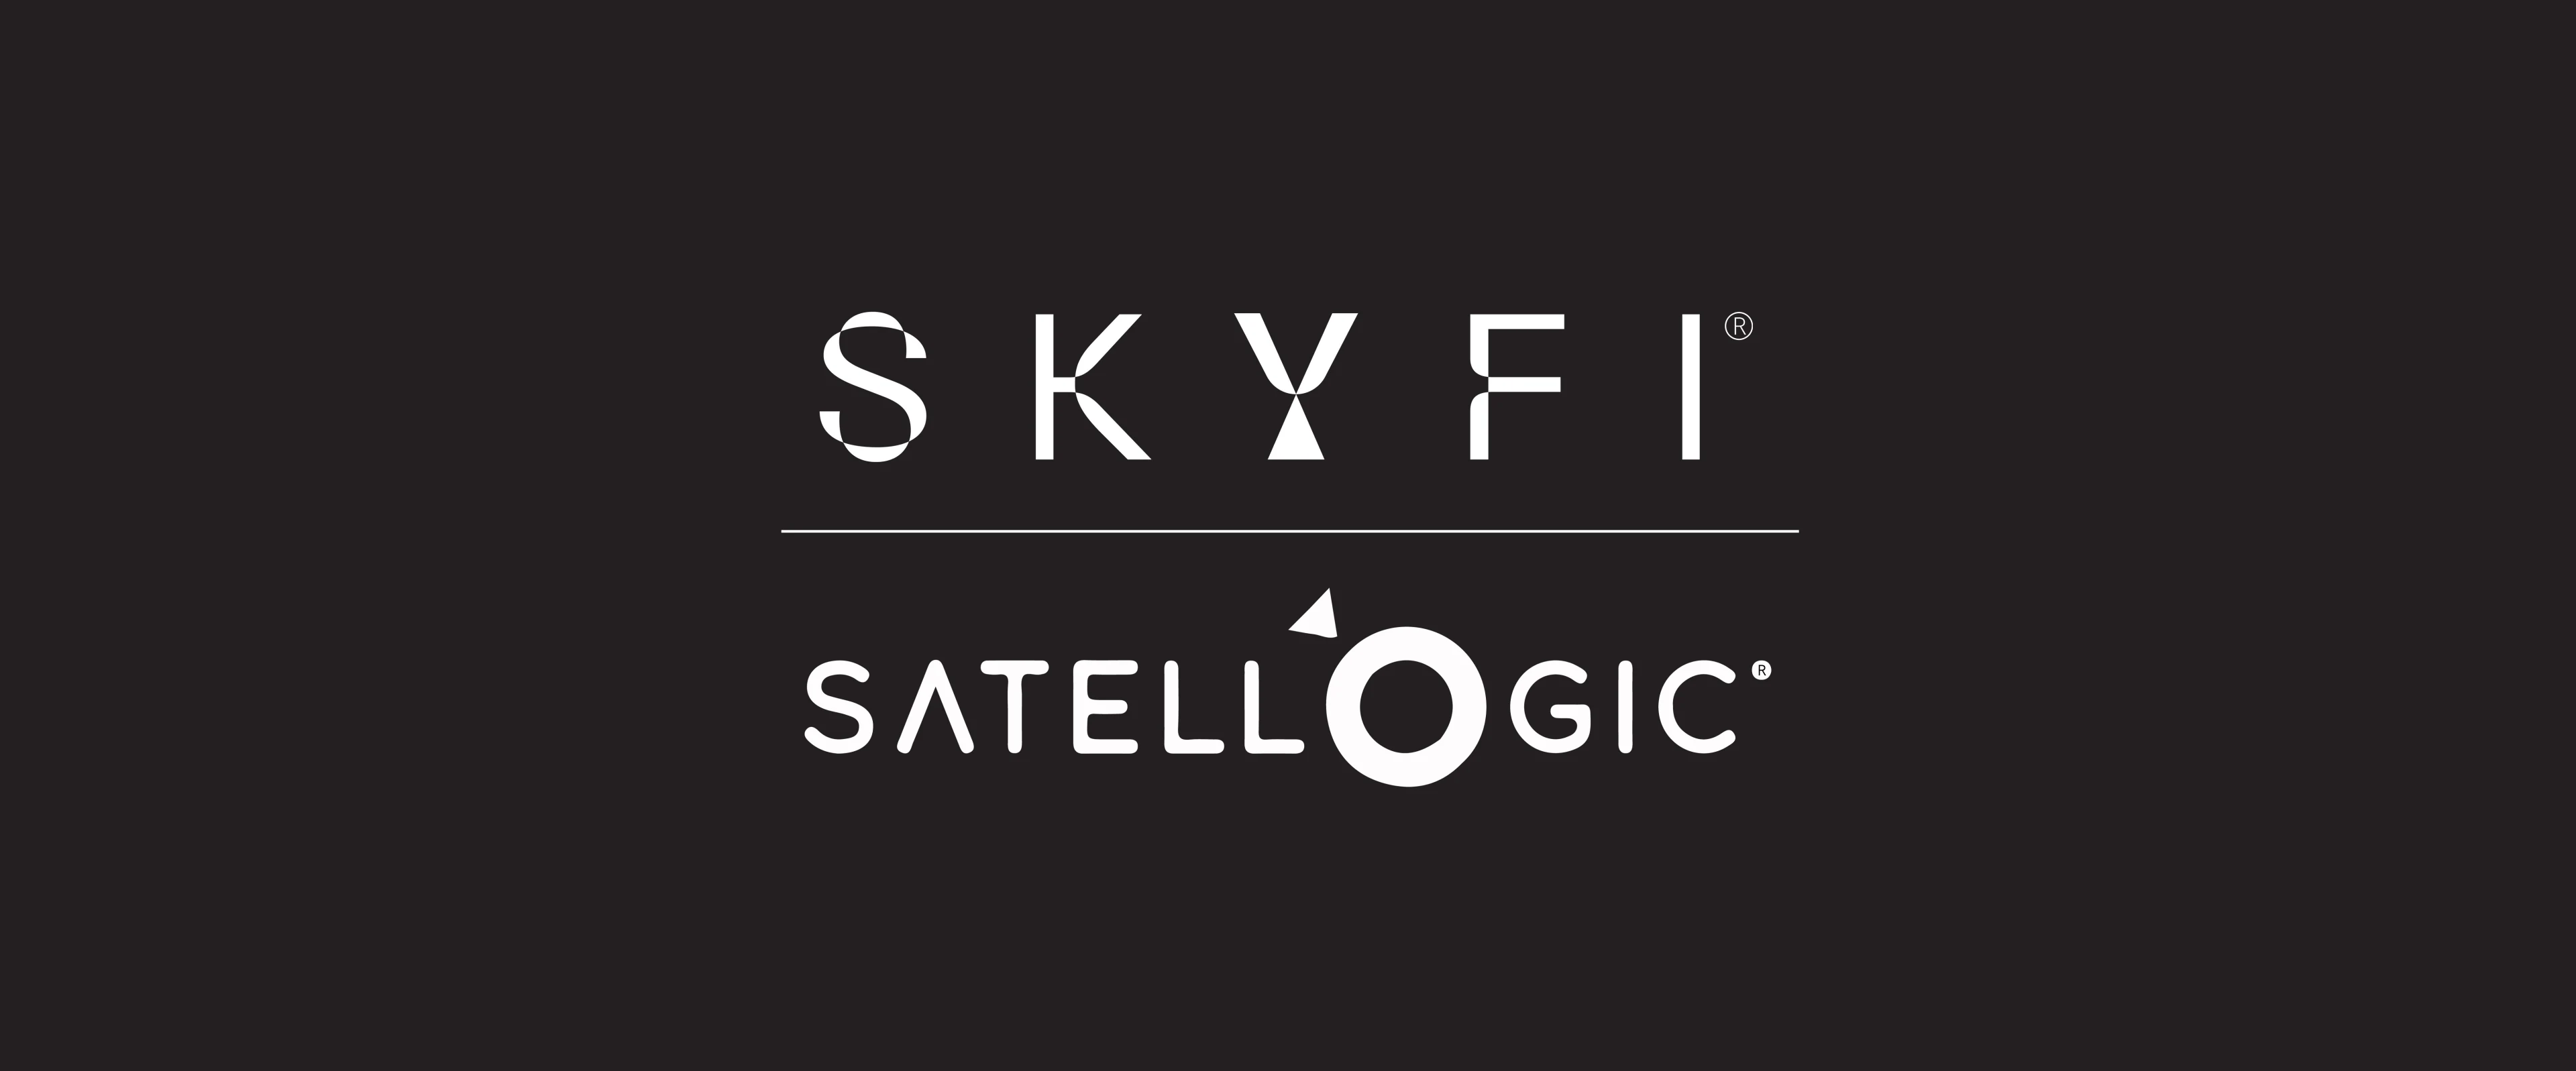 Satellogic x SkyFi Launch Archive